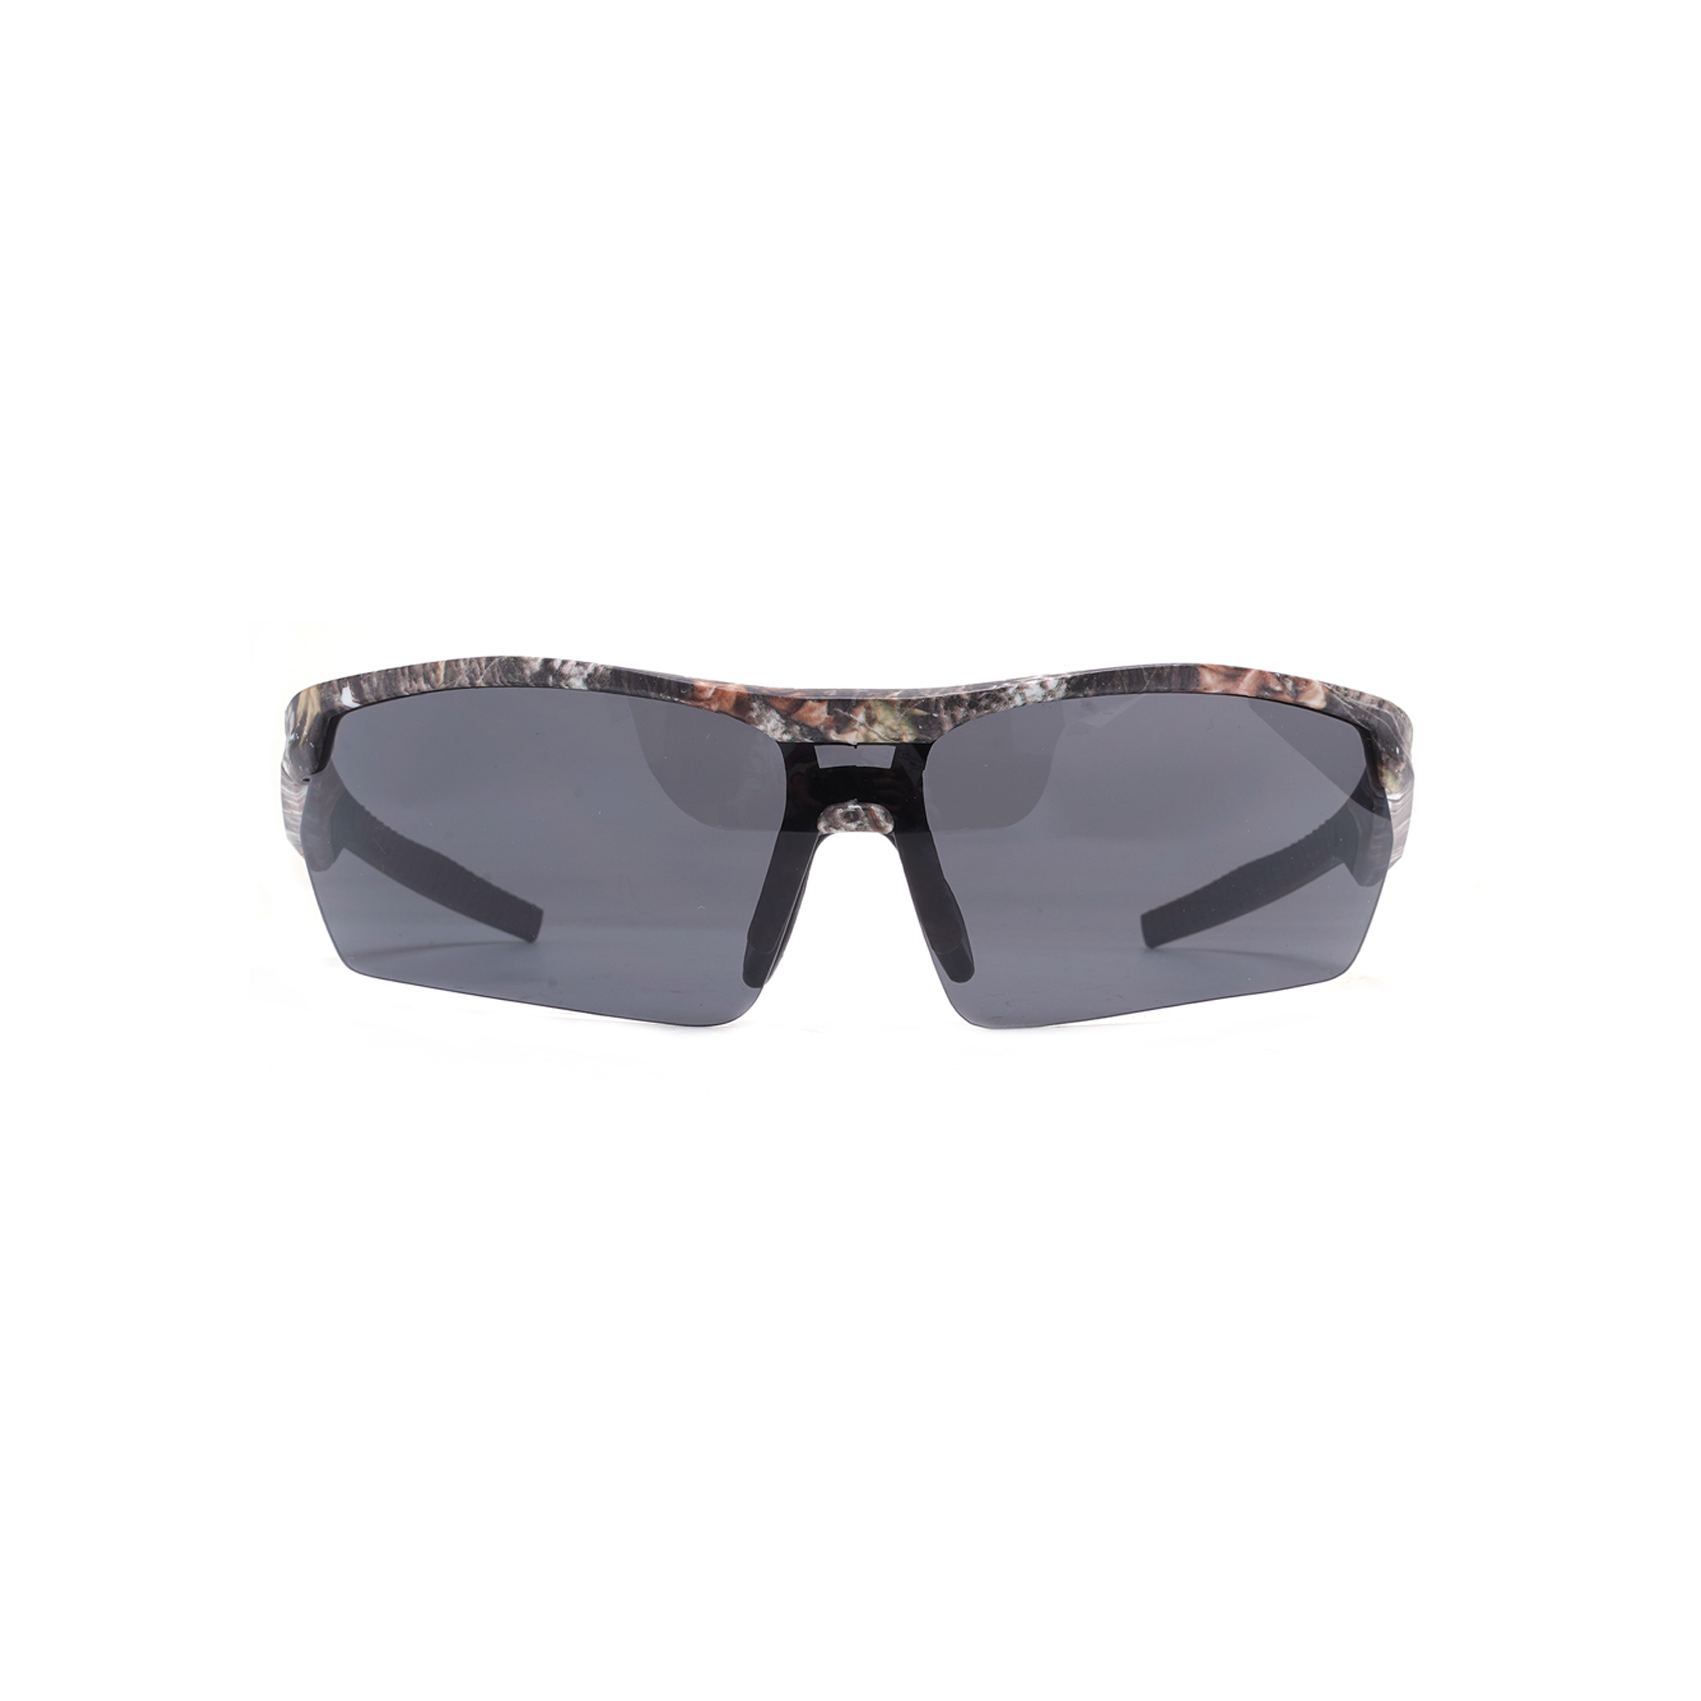 Half-frame Camouflage Mirrored Sport Sunglasses Wholesale Fashion Sport Sunglasses Manufacturer